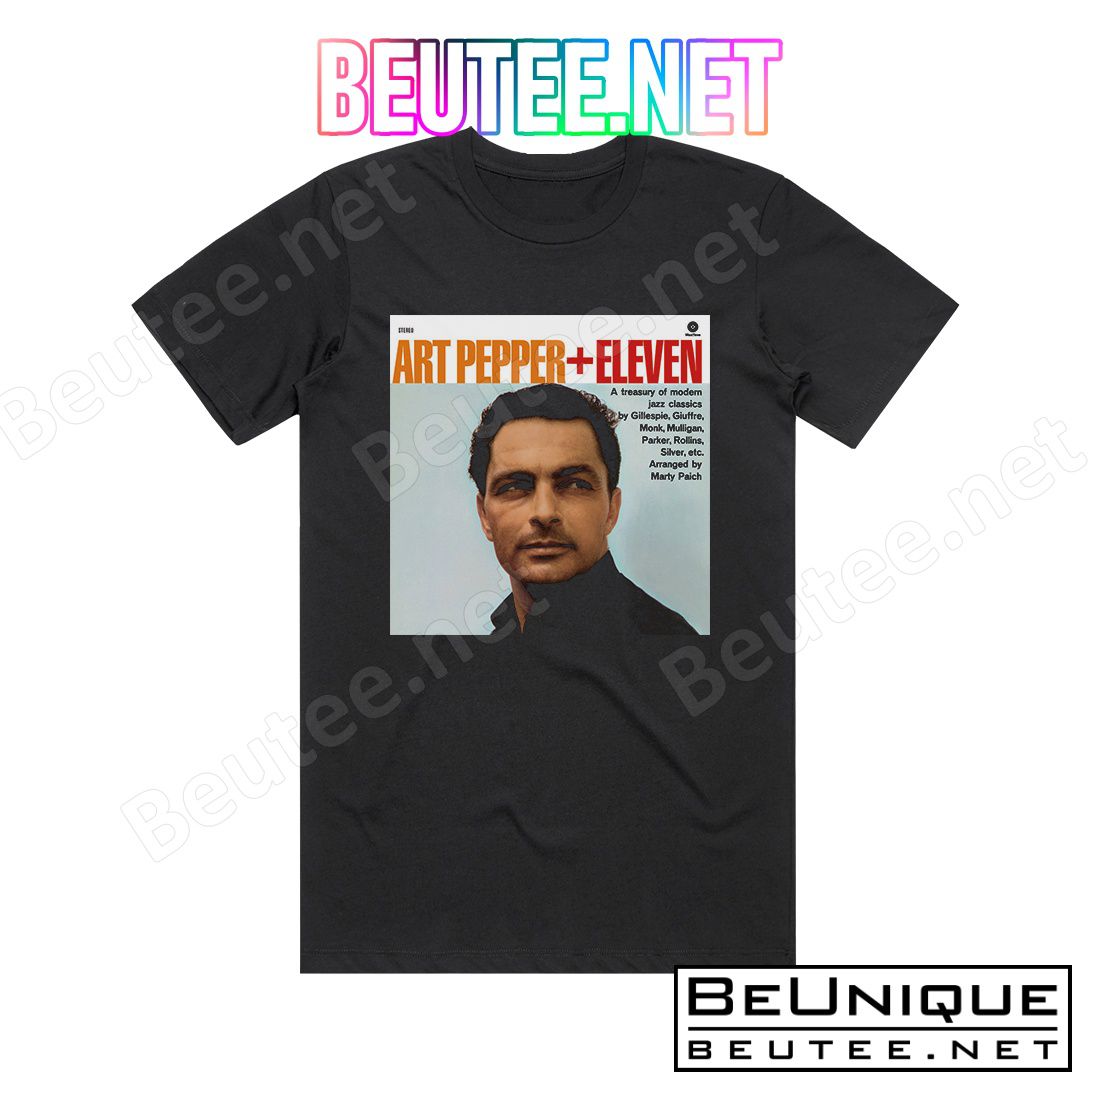 Art Pepper Art Pepper Eleven Album Cover T-Shirt